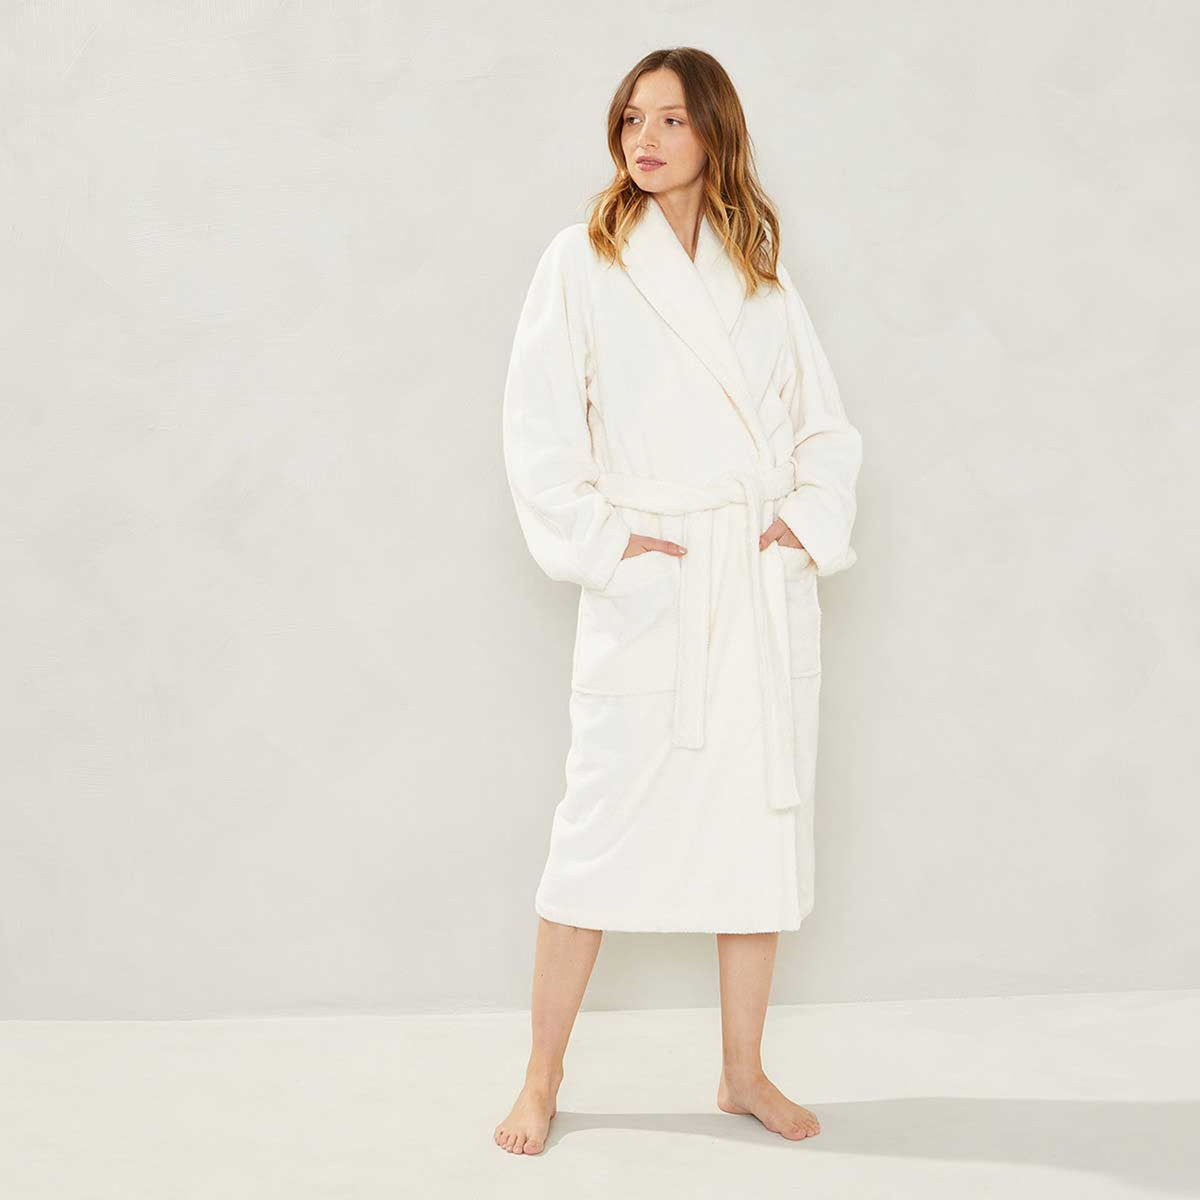 Model Wearing Yves Delorme Etoile Bath Robe in Nacre Color